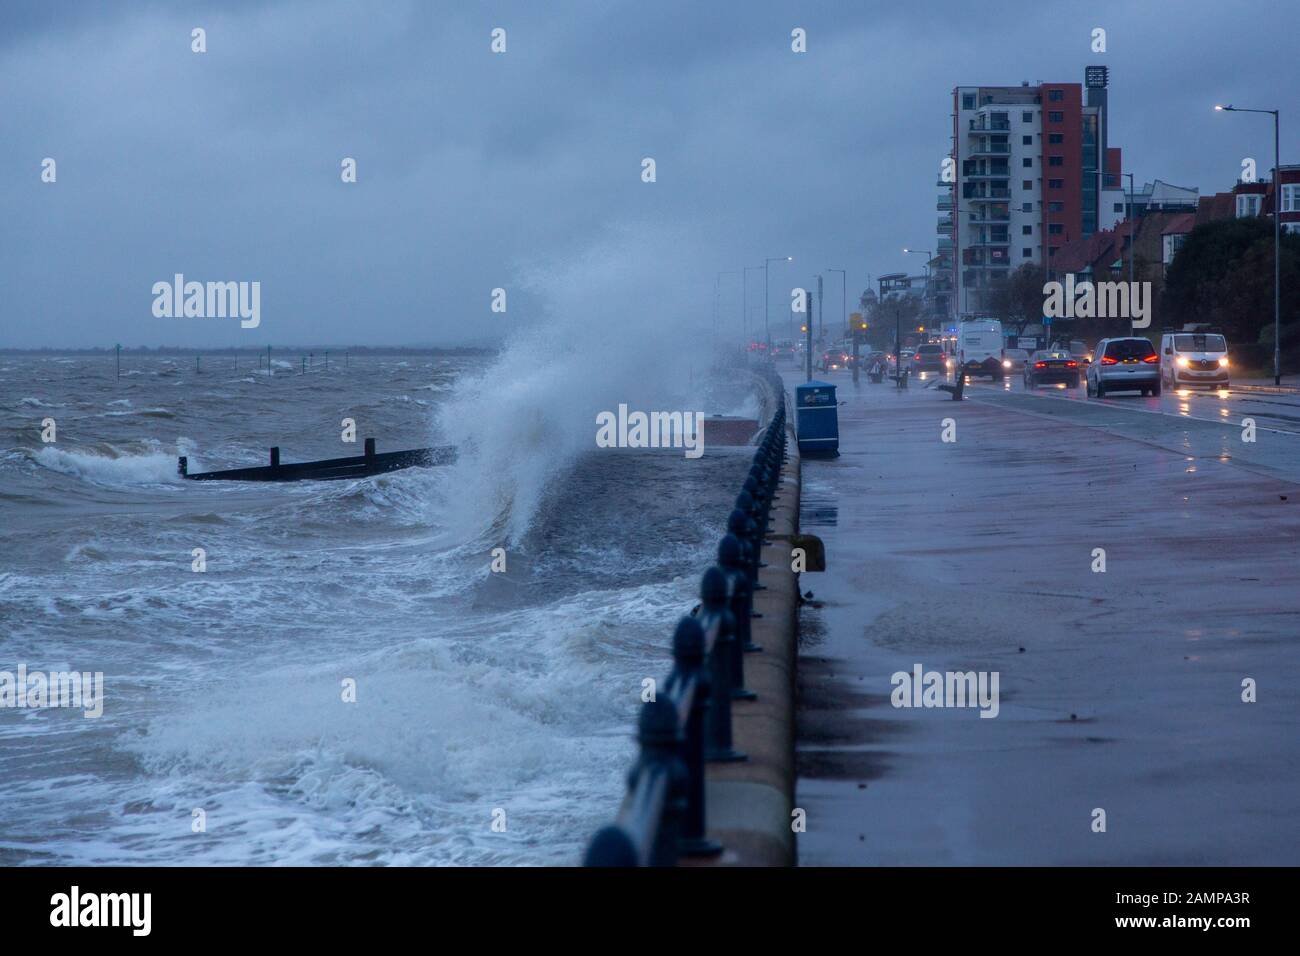 Januar 2020. Southend-on-Sea, Großbritannien. Überreste des Sturms Brendan schaffen raue Meere in der Themsemündung. Penelope Barritt/Alamy Live News Stockfoto